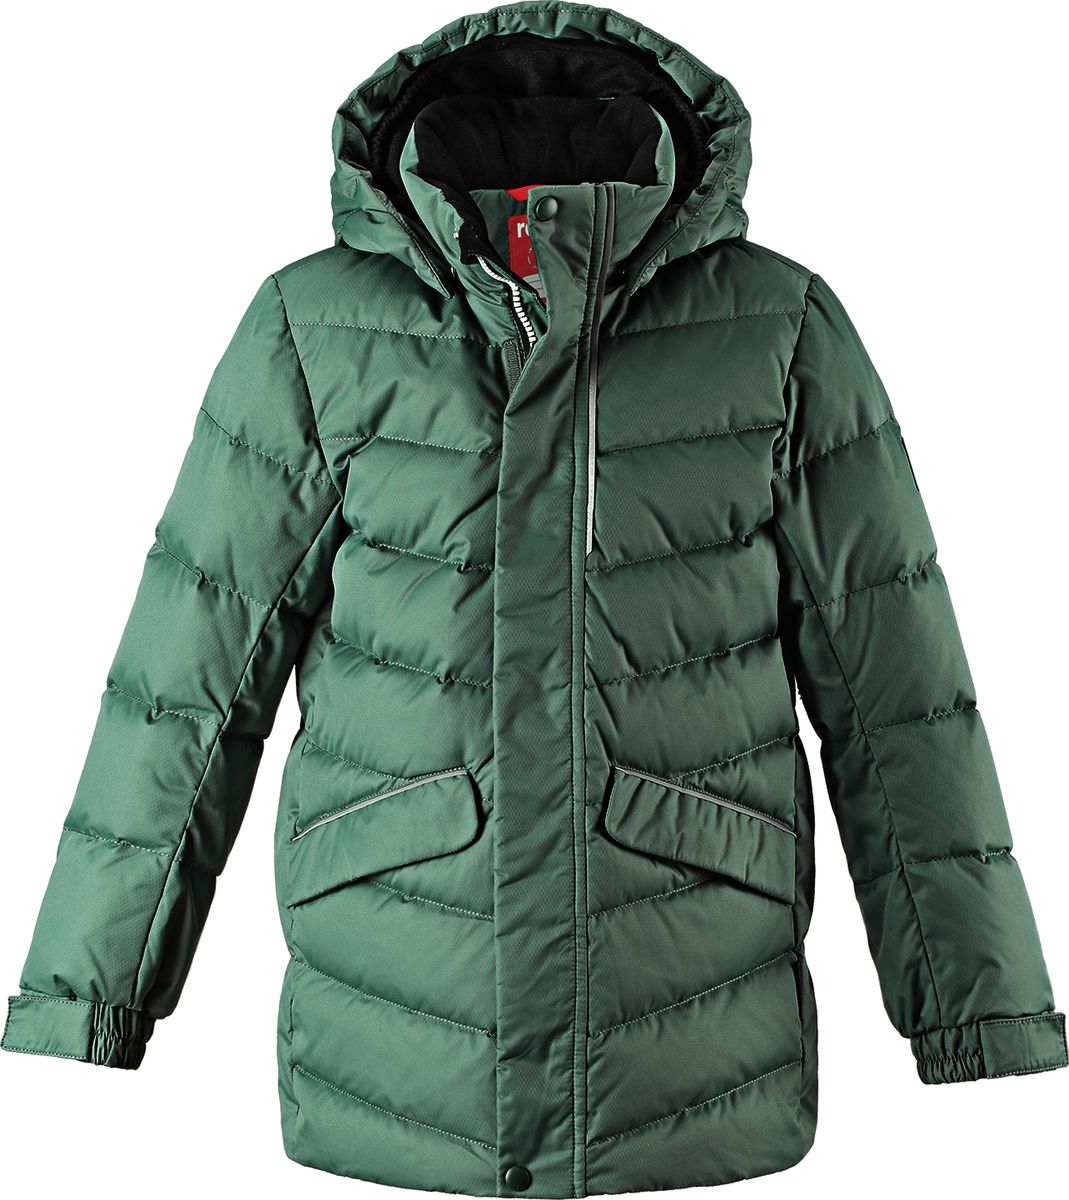 Куртка для мальчика Reima Janne, цвет: зеленый. 5313718630. Размер 122